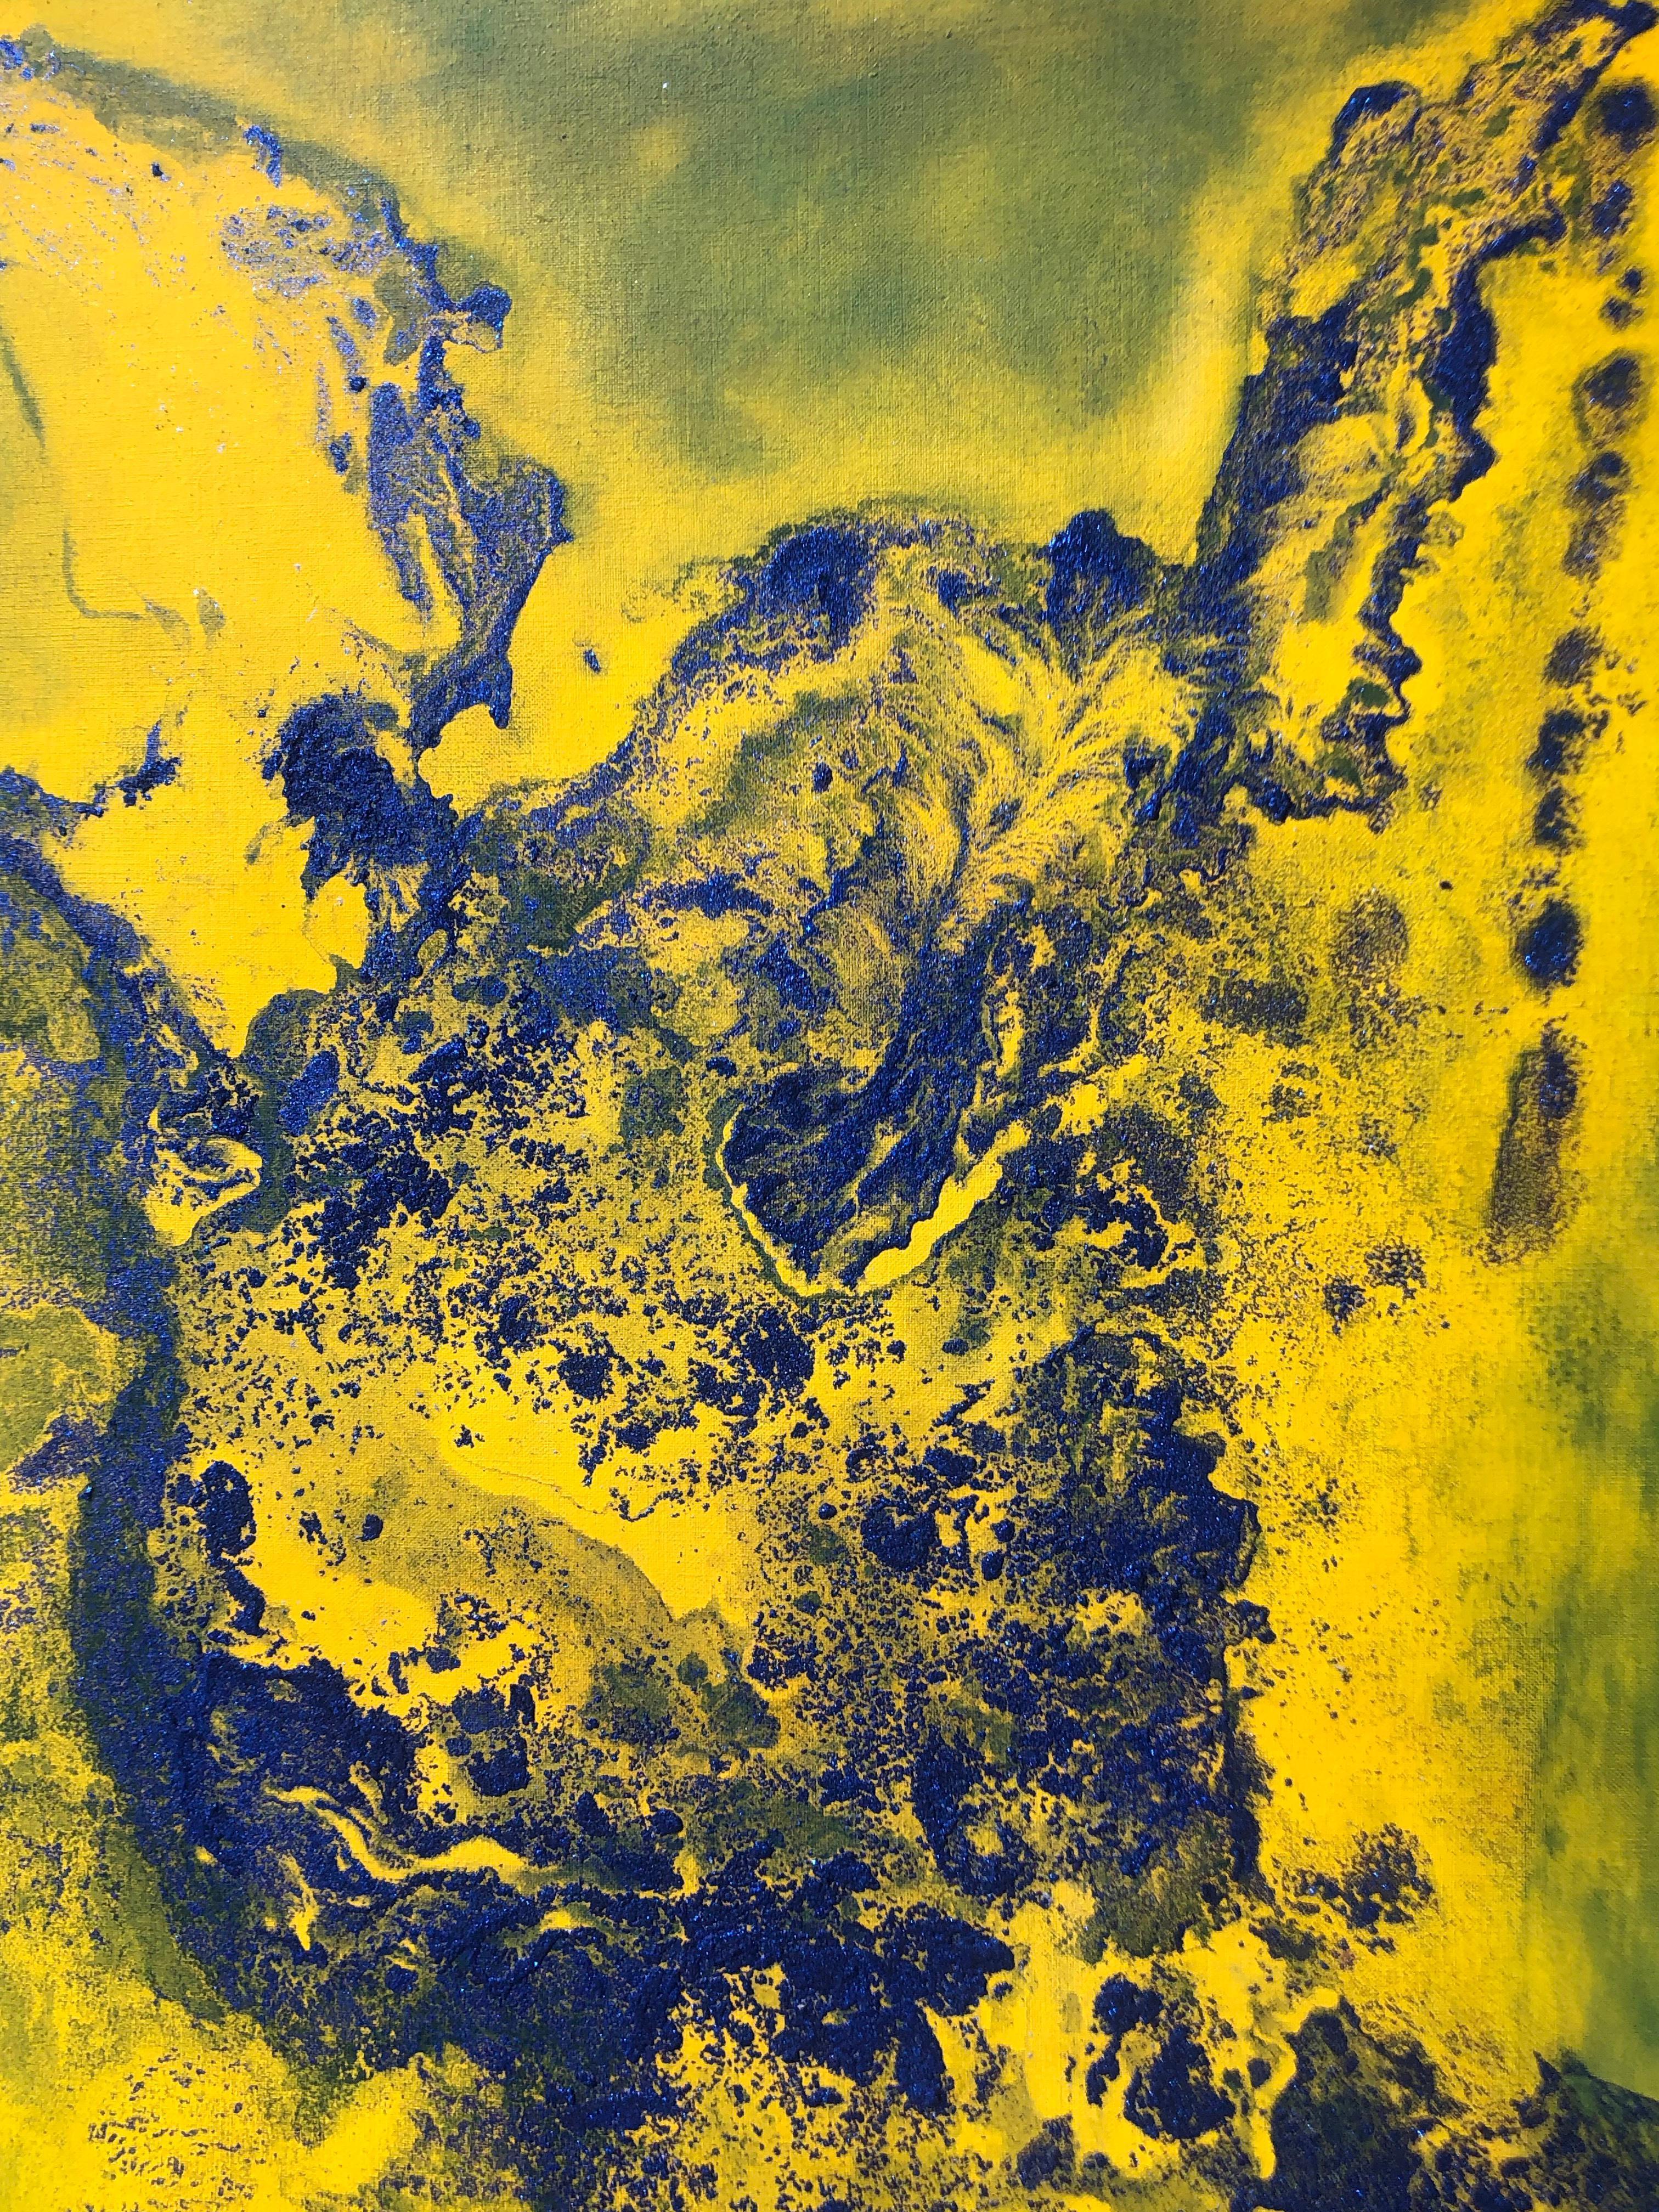 Contemporary art - 21st century painting on linen canvas - Blue, yellow, waves – Painting von Volodymyr Zayichenko